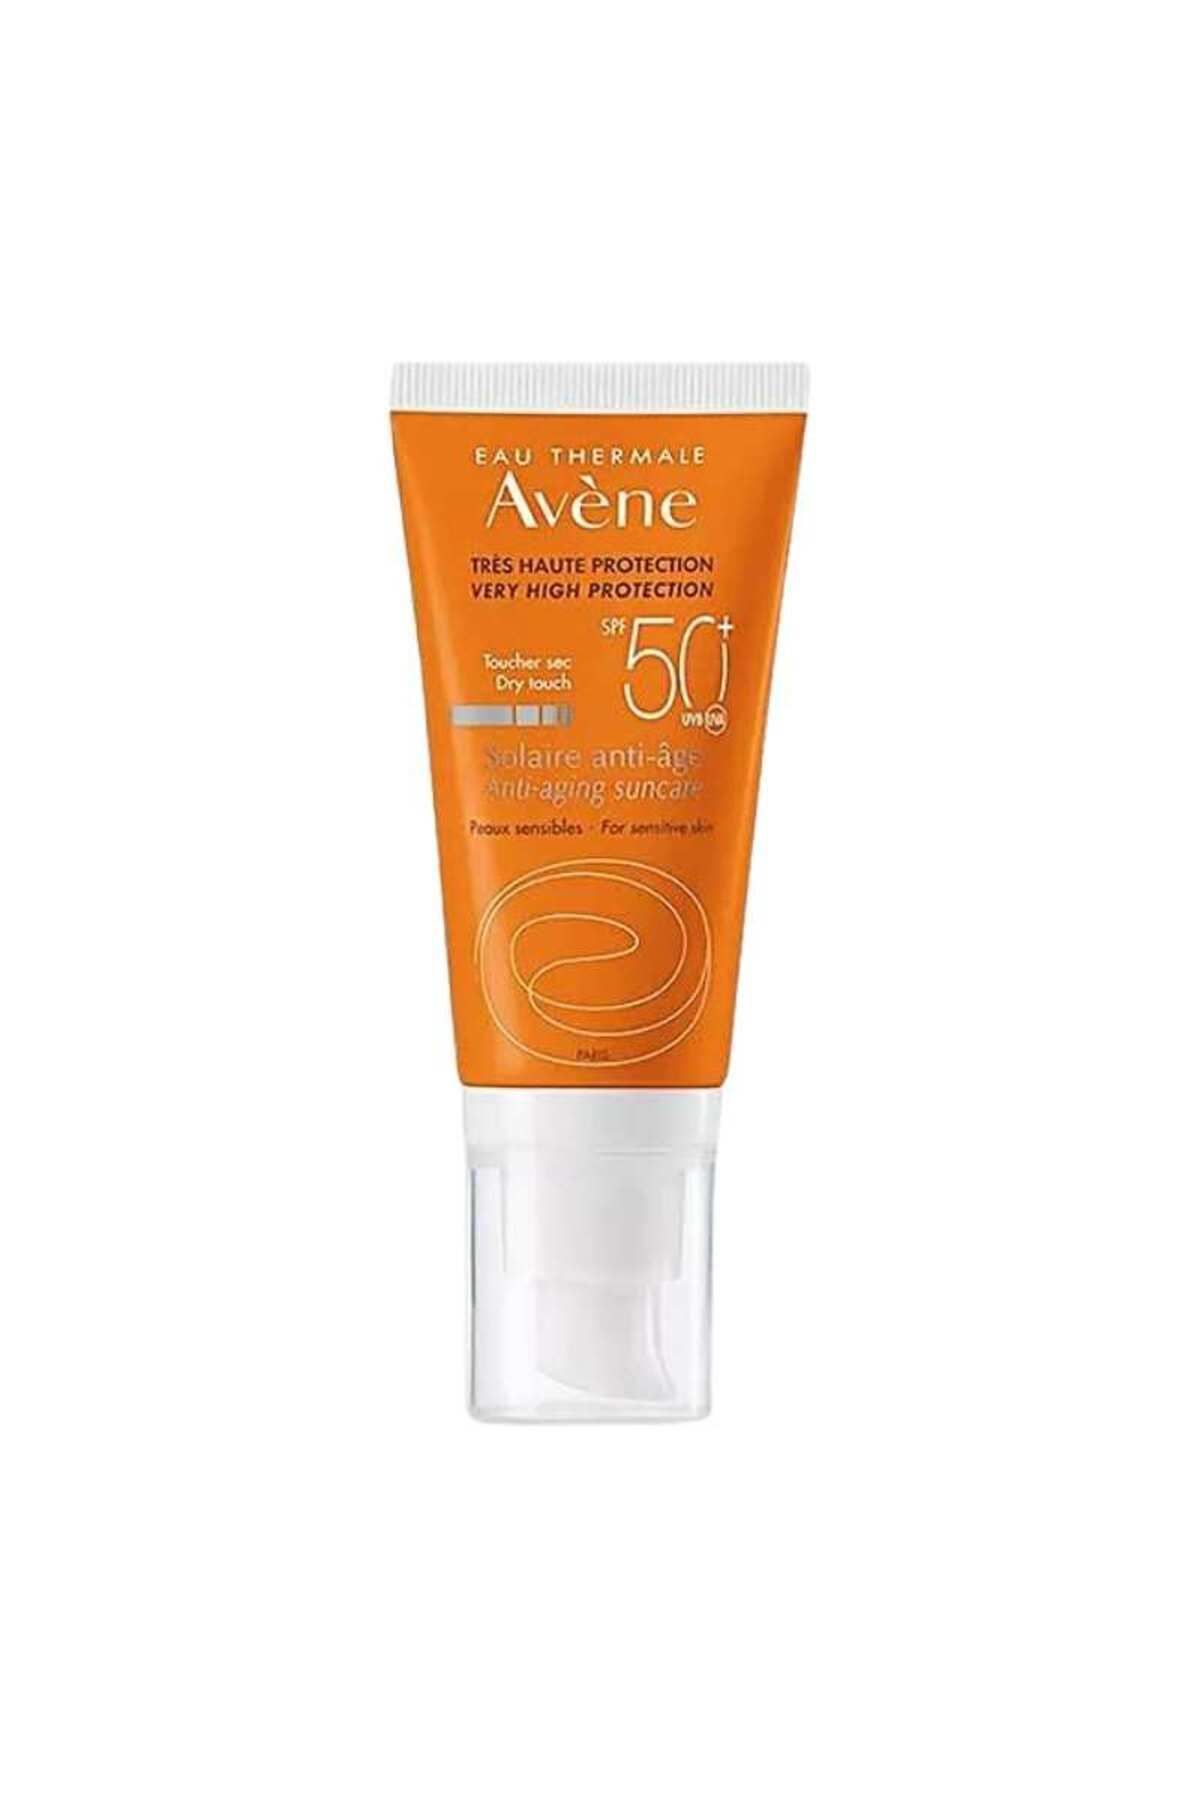 Avene Solaire Anti-age Spf50 Creme 50 ml - Anti Aging Suncare